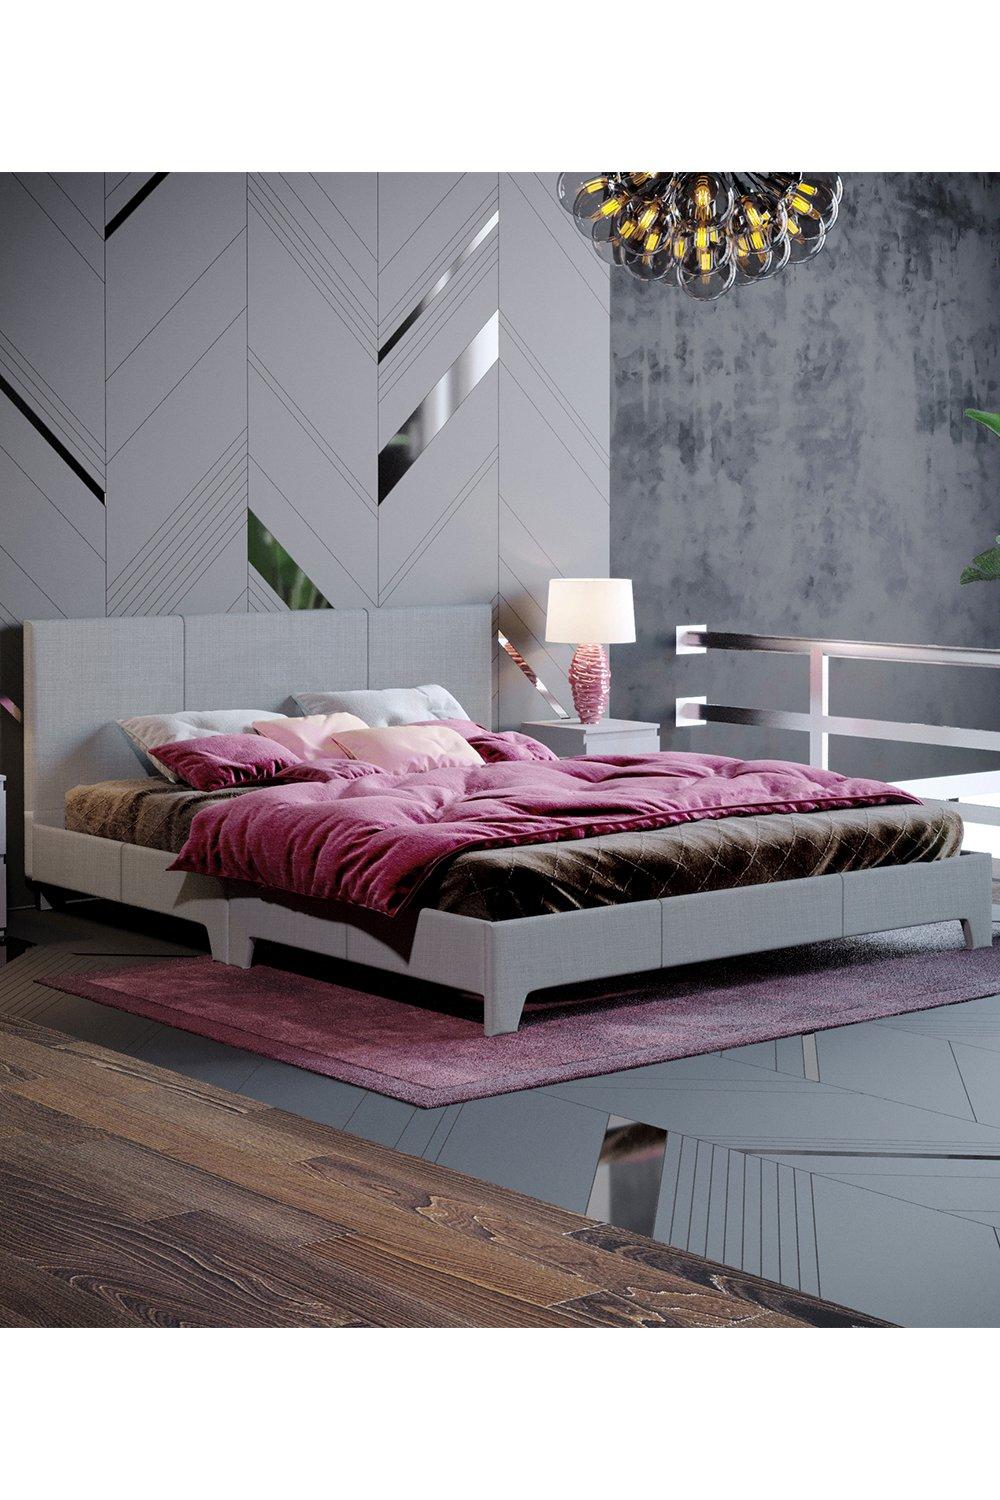 Vida Designs Victoria King Size Bed Frame Linen Fabric 770 x 1550 x 2070 mm